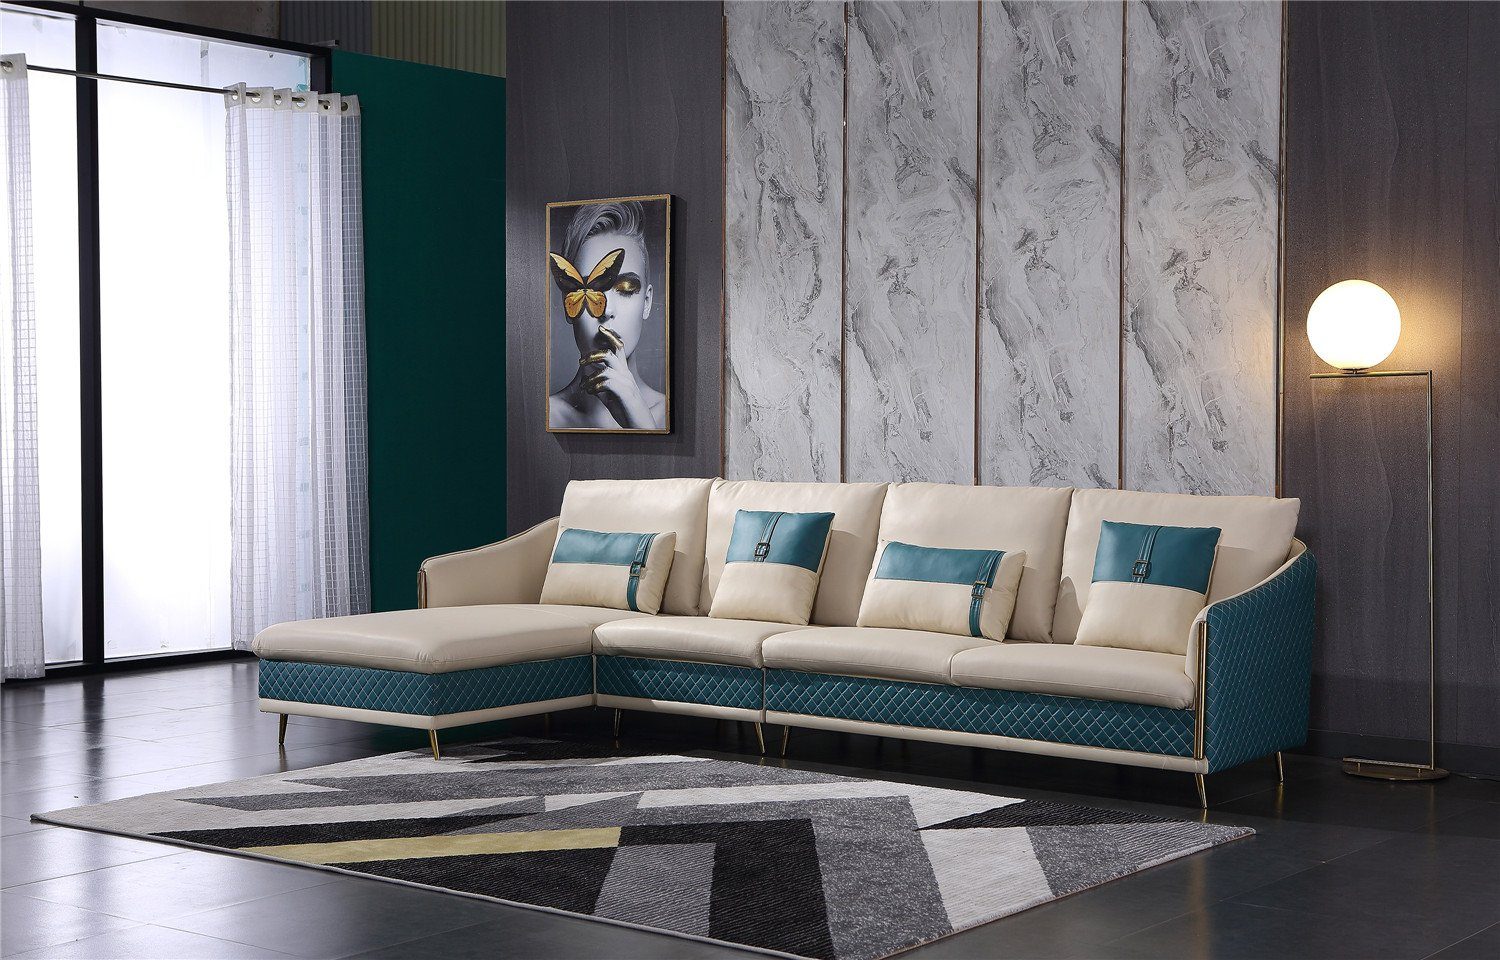 JVmoebel Ecksofa Couch Ecksofa Leder Wohnlandschaft Garnitur Design Modern, Made in Europe Blau